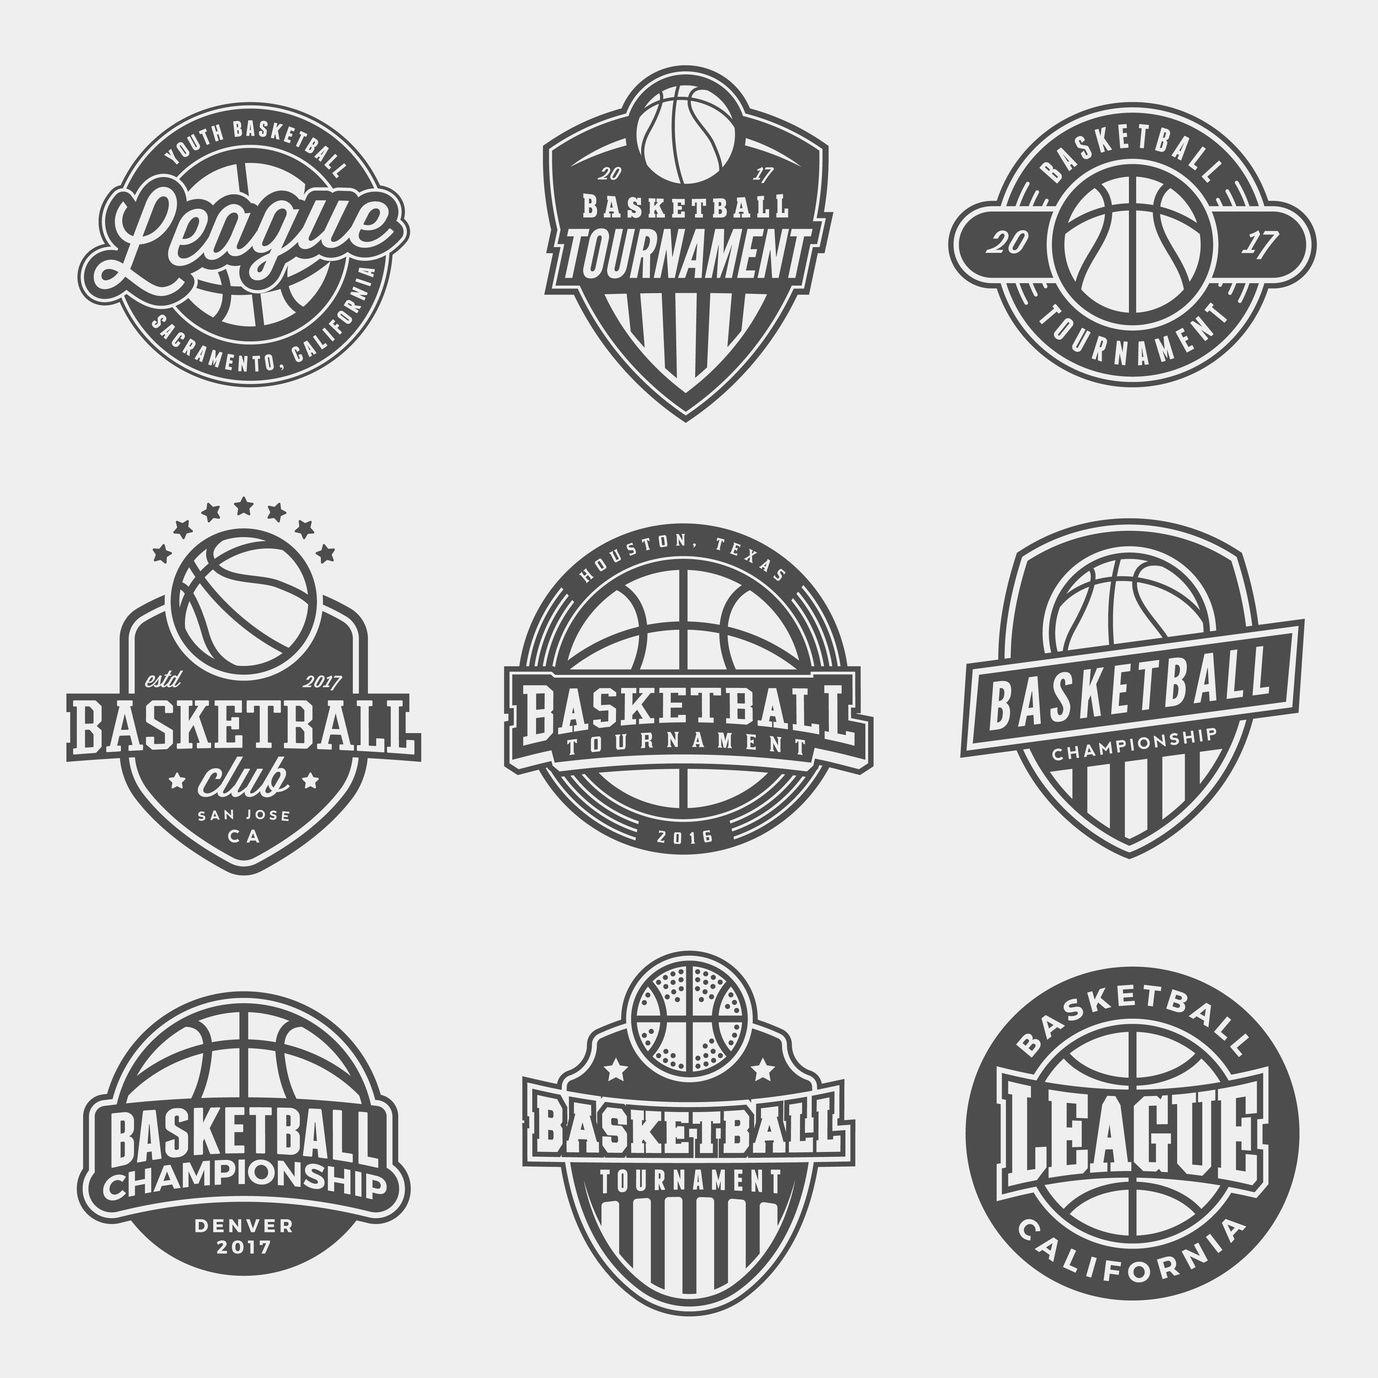 Google Basketball Logo - How to Create a Fun Basketball Logo • Online Logo Maker's Blog